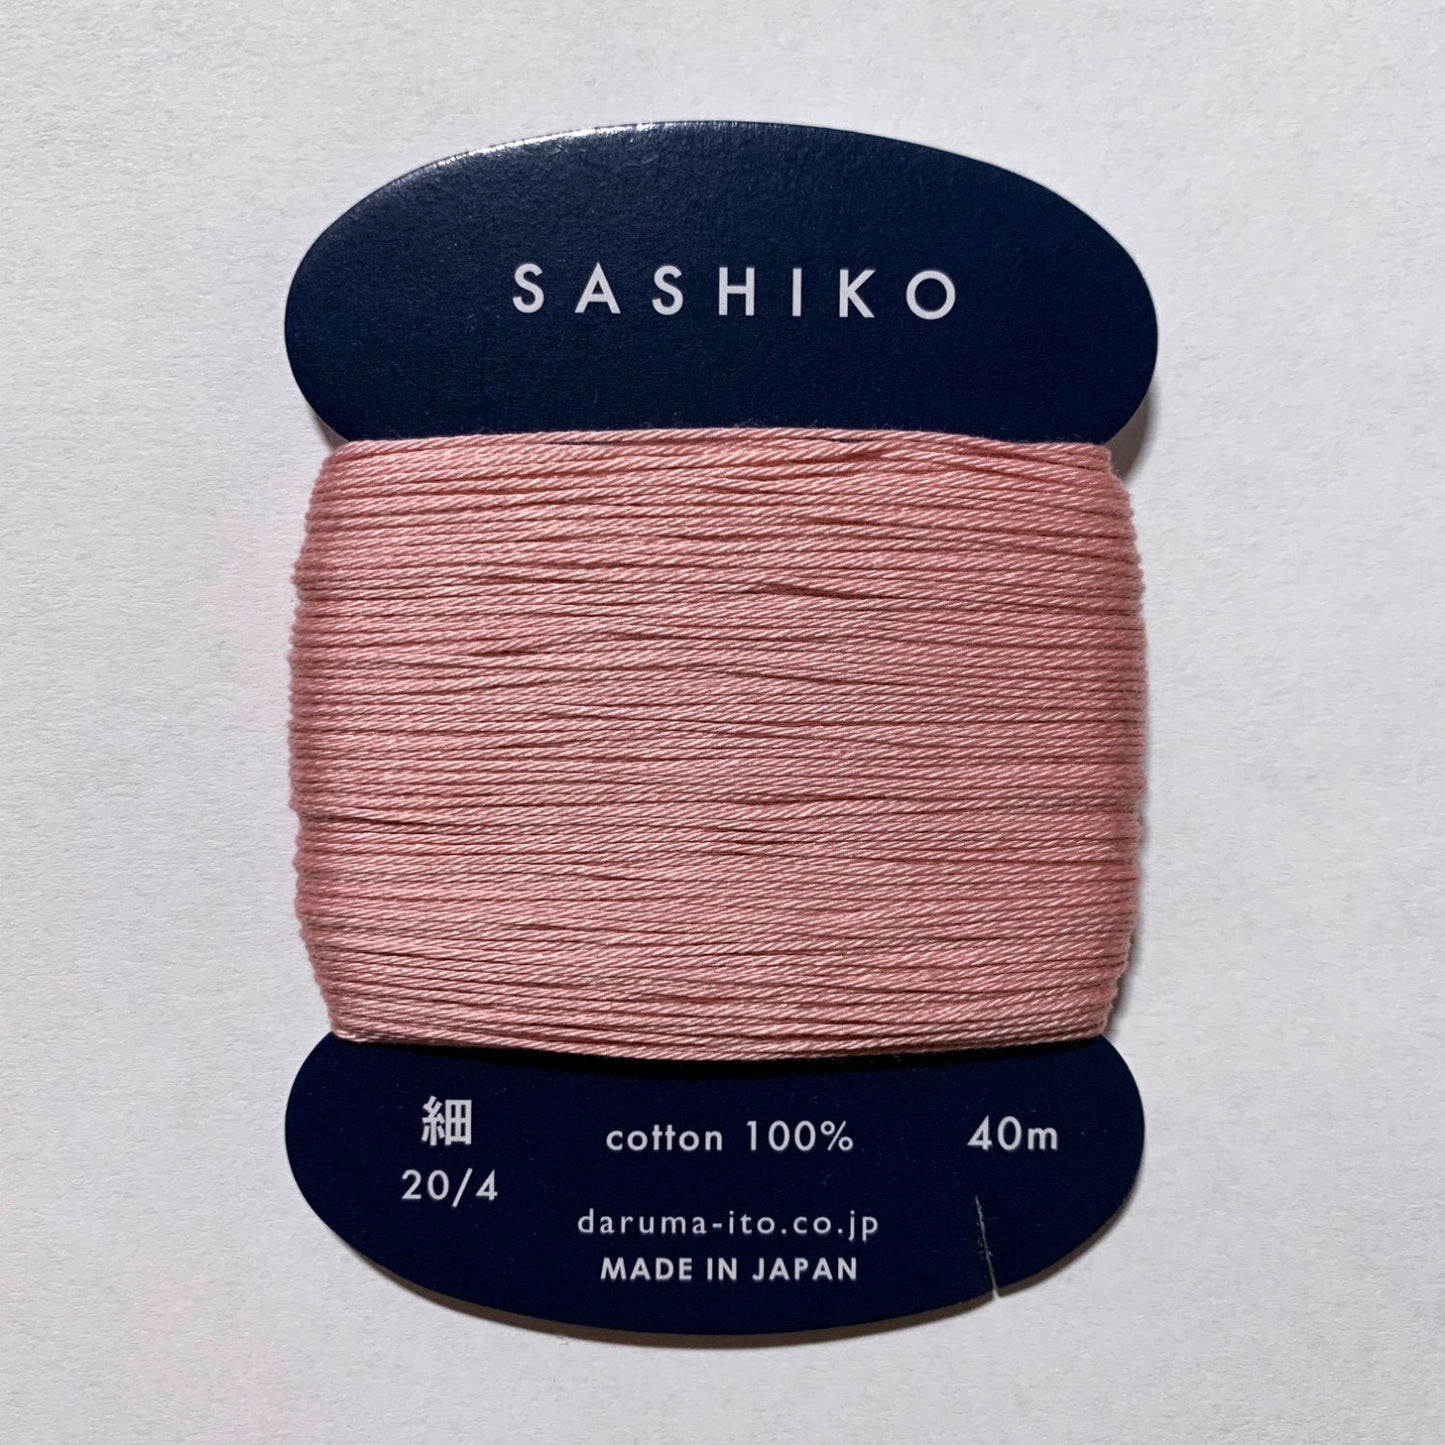 Daruma #211 PLUM BLOSSOM Japanese Cotton SASHIKO thread 40 meter skein 20/4 こうばい blossom pink